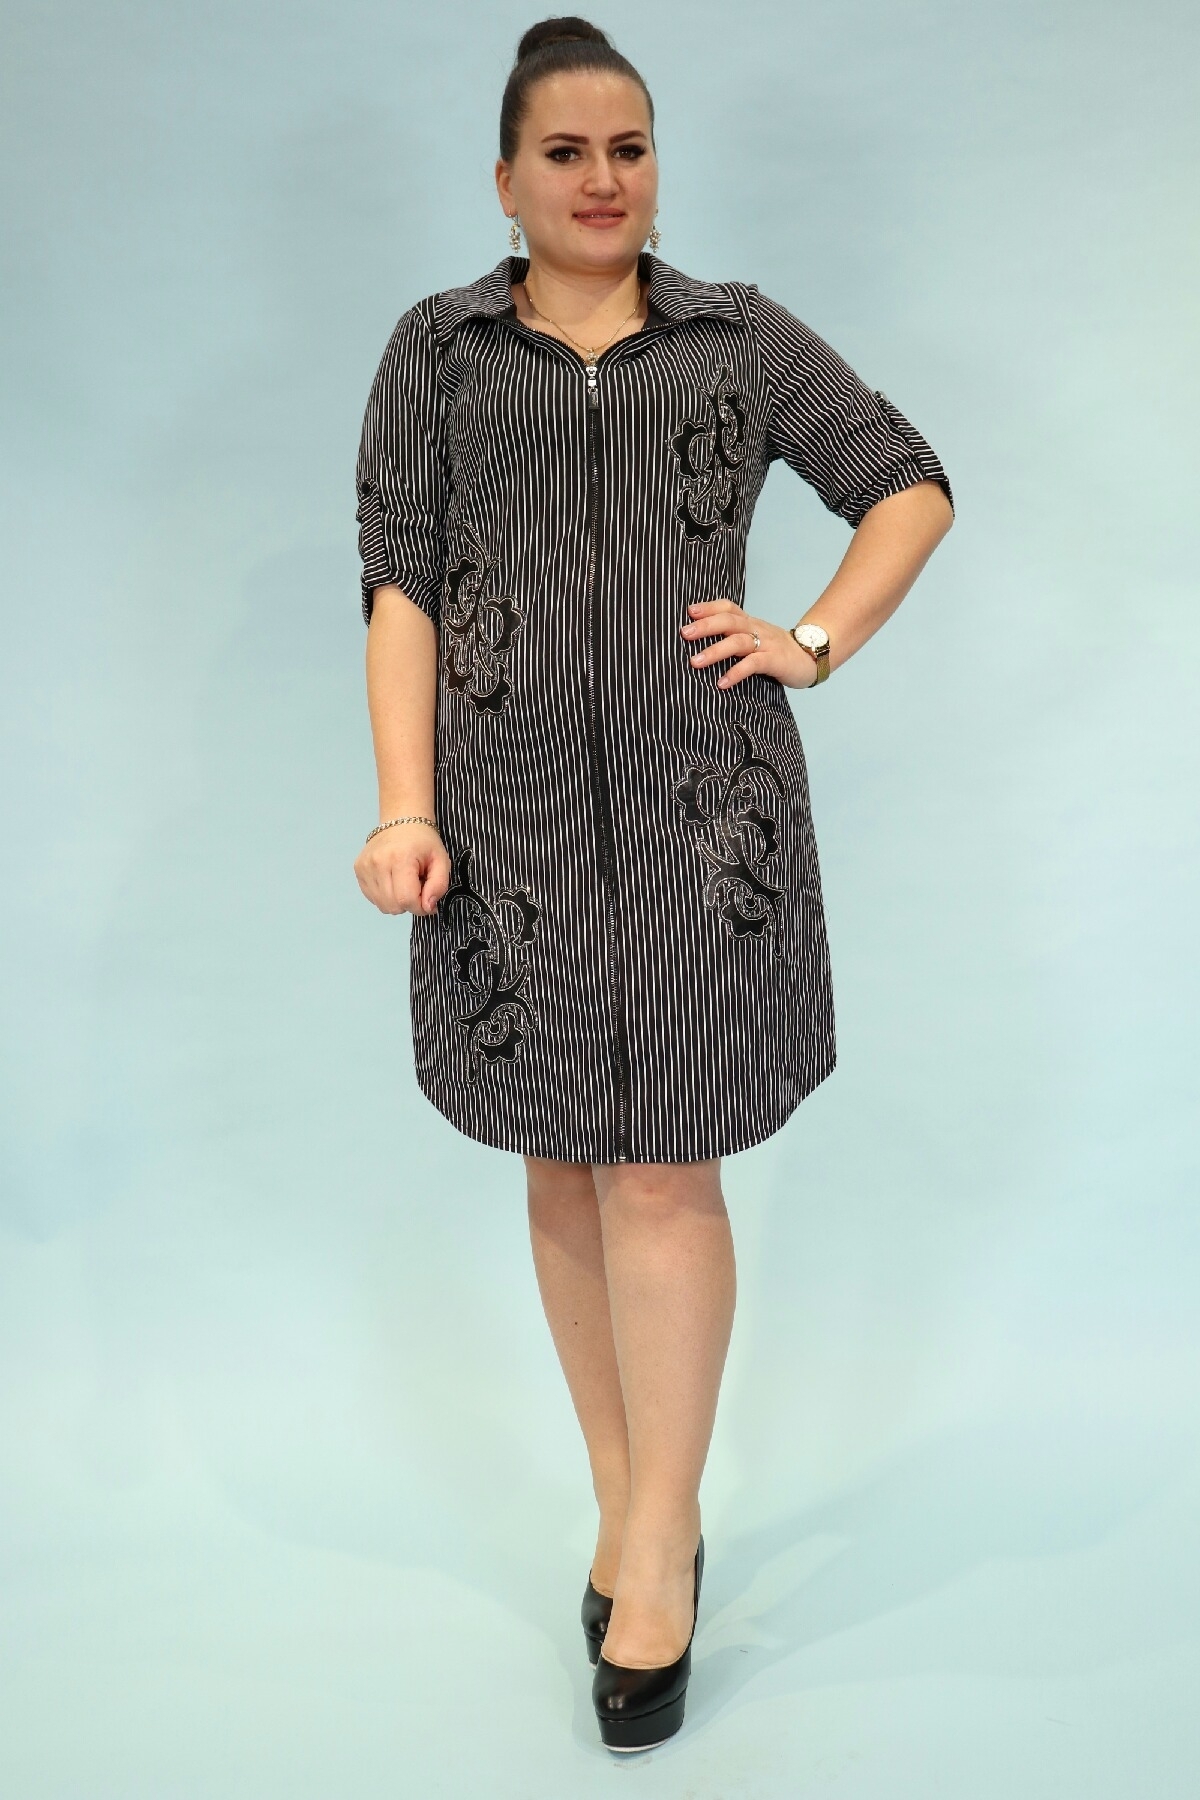 triped zipper embroidery tunic dress